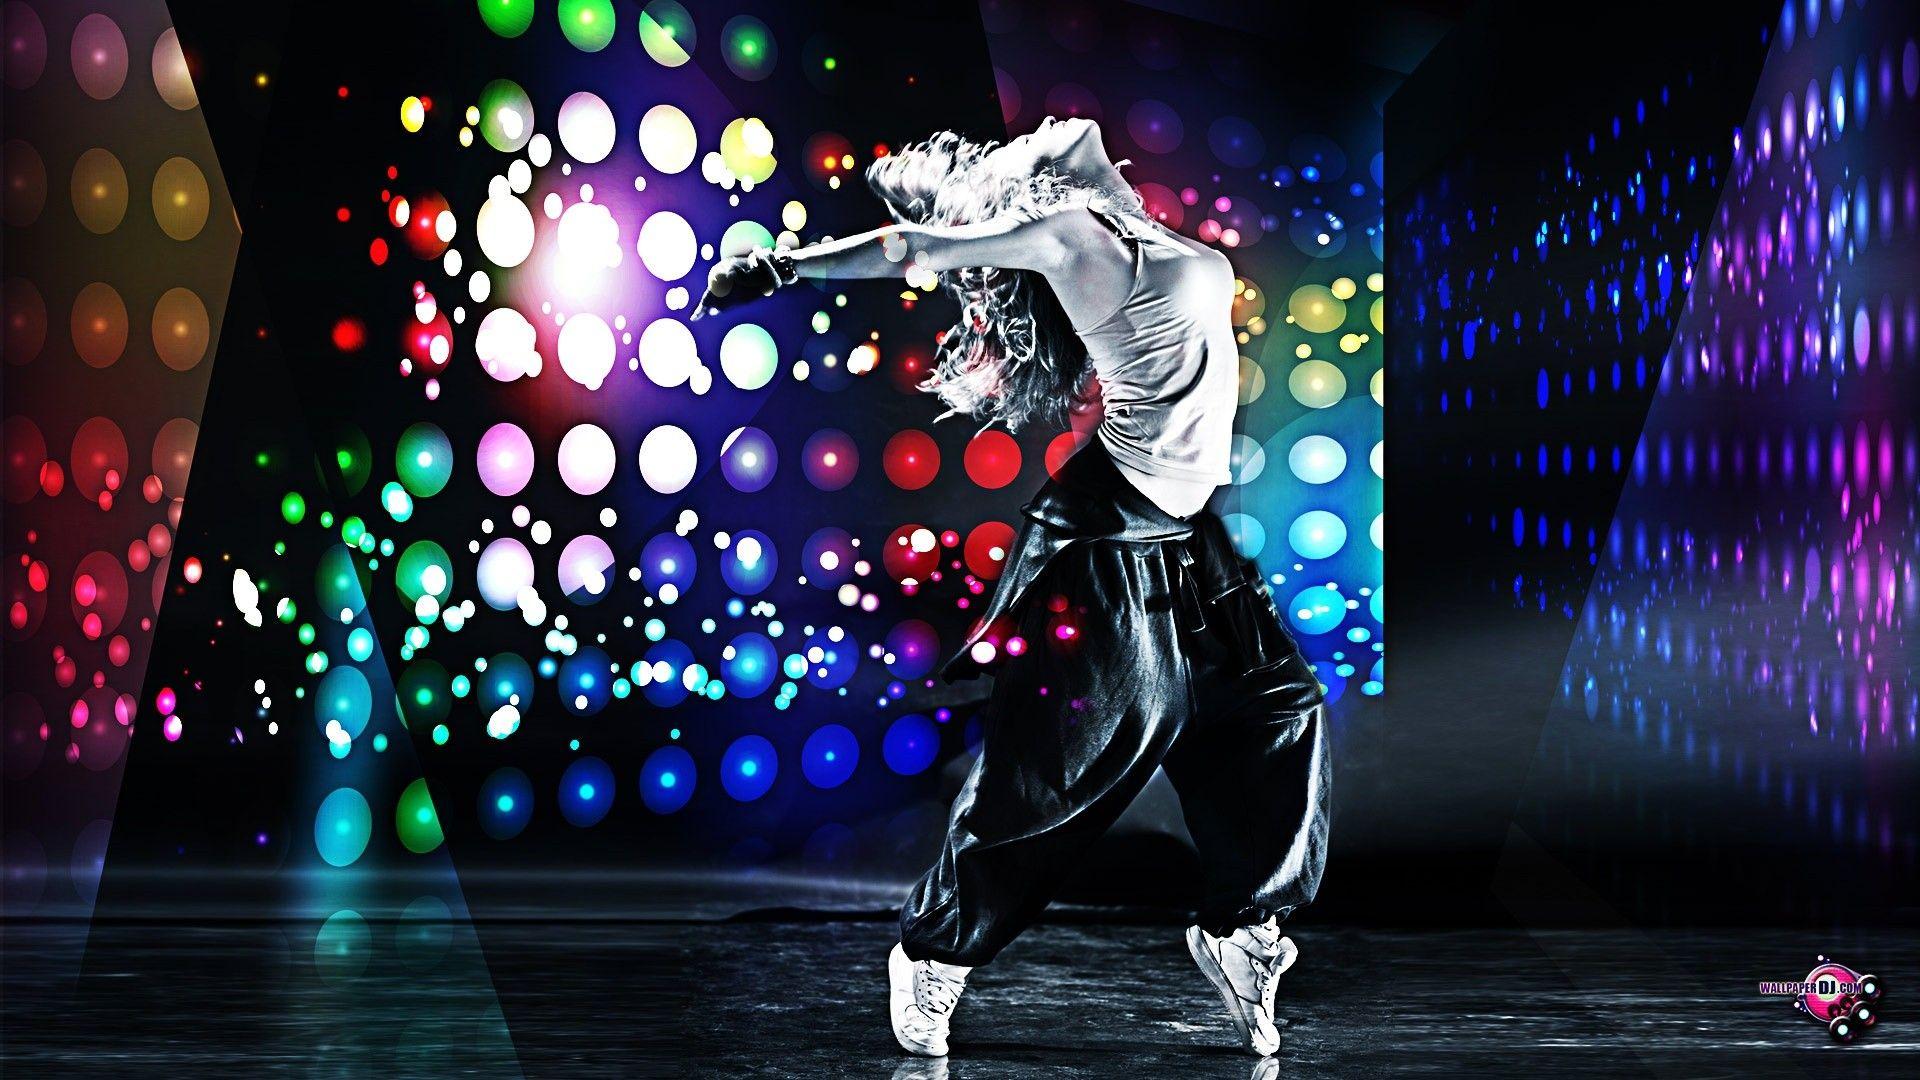 Dance Full HD Quality Wallpaper, Dance Wallpaper